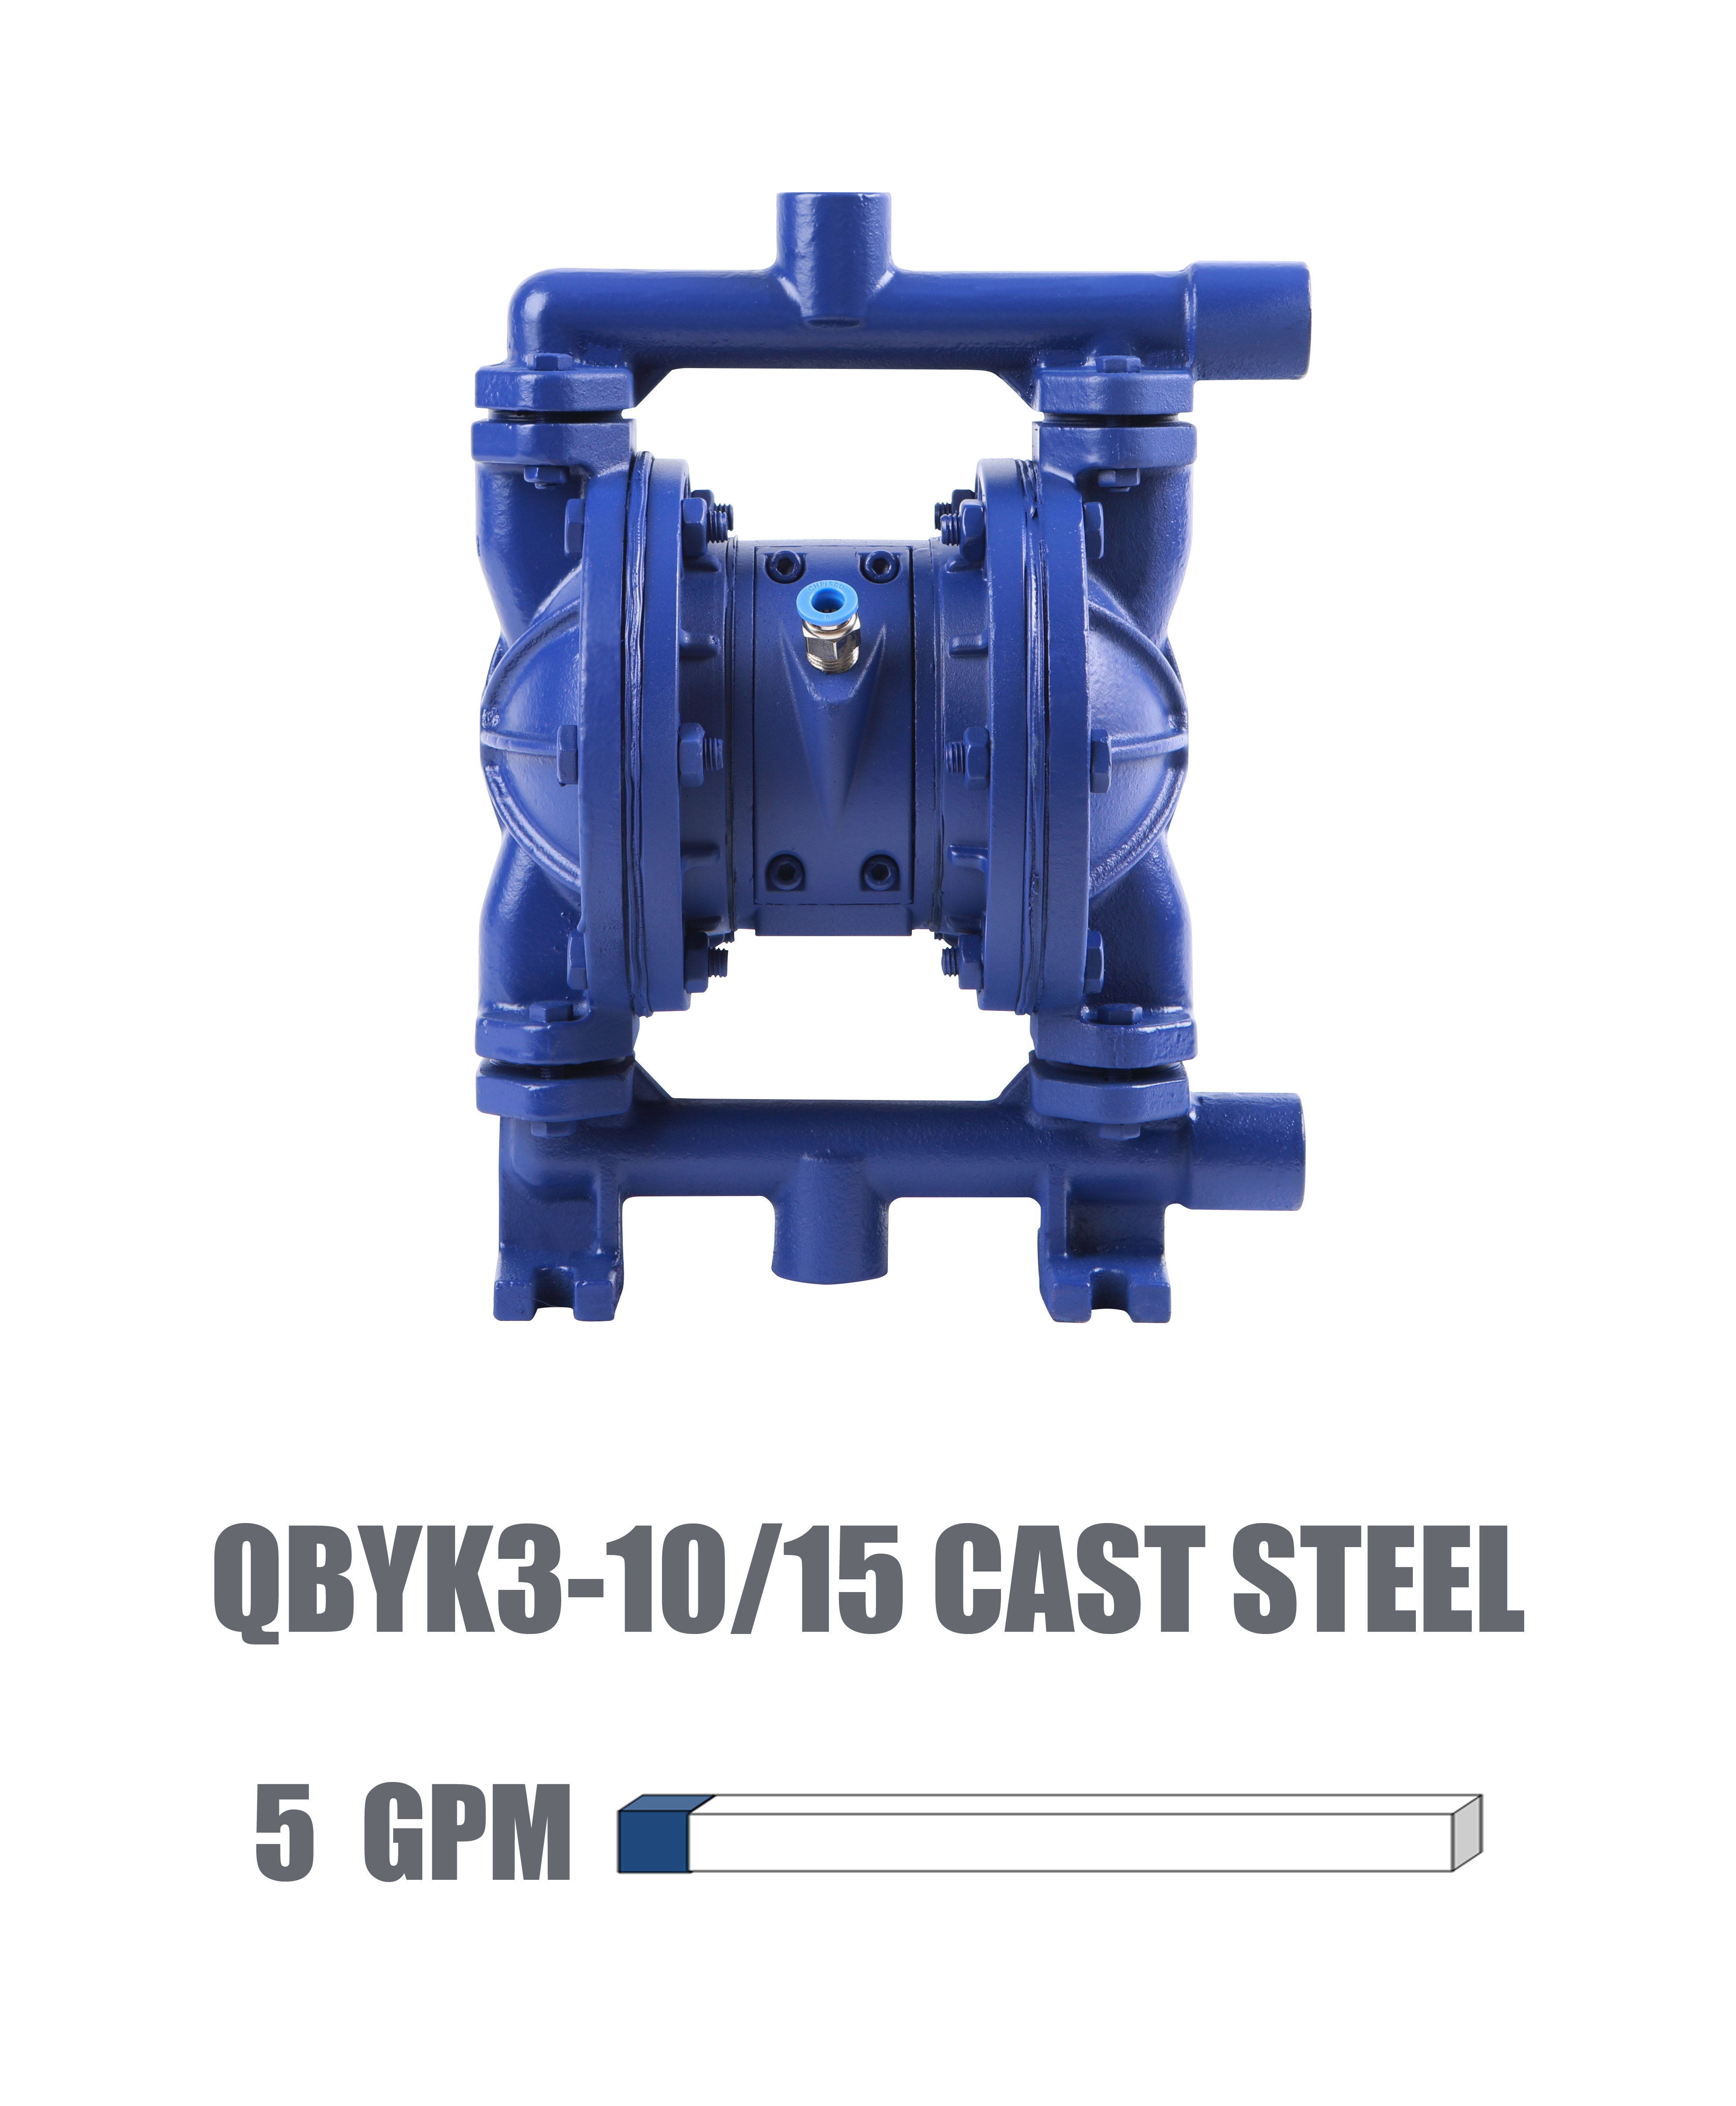 QBYK3-10/15 Cast steel